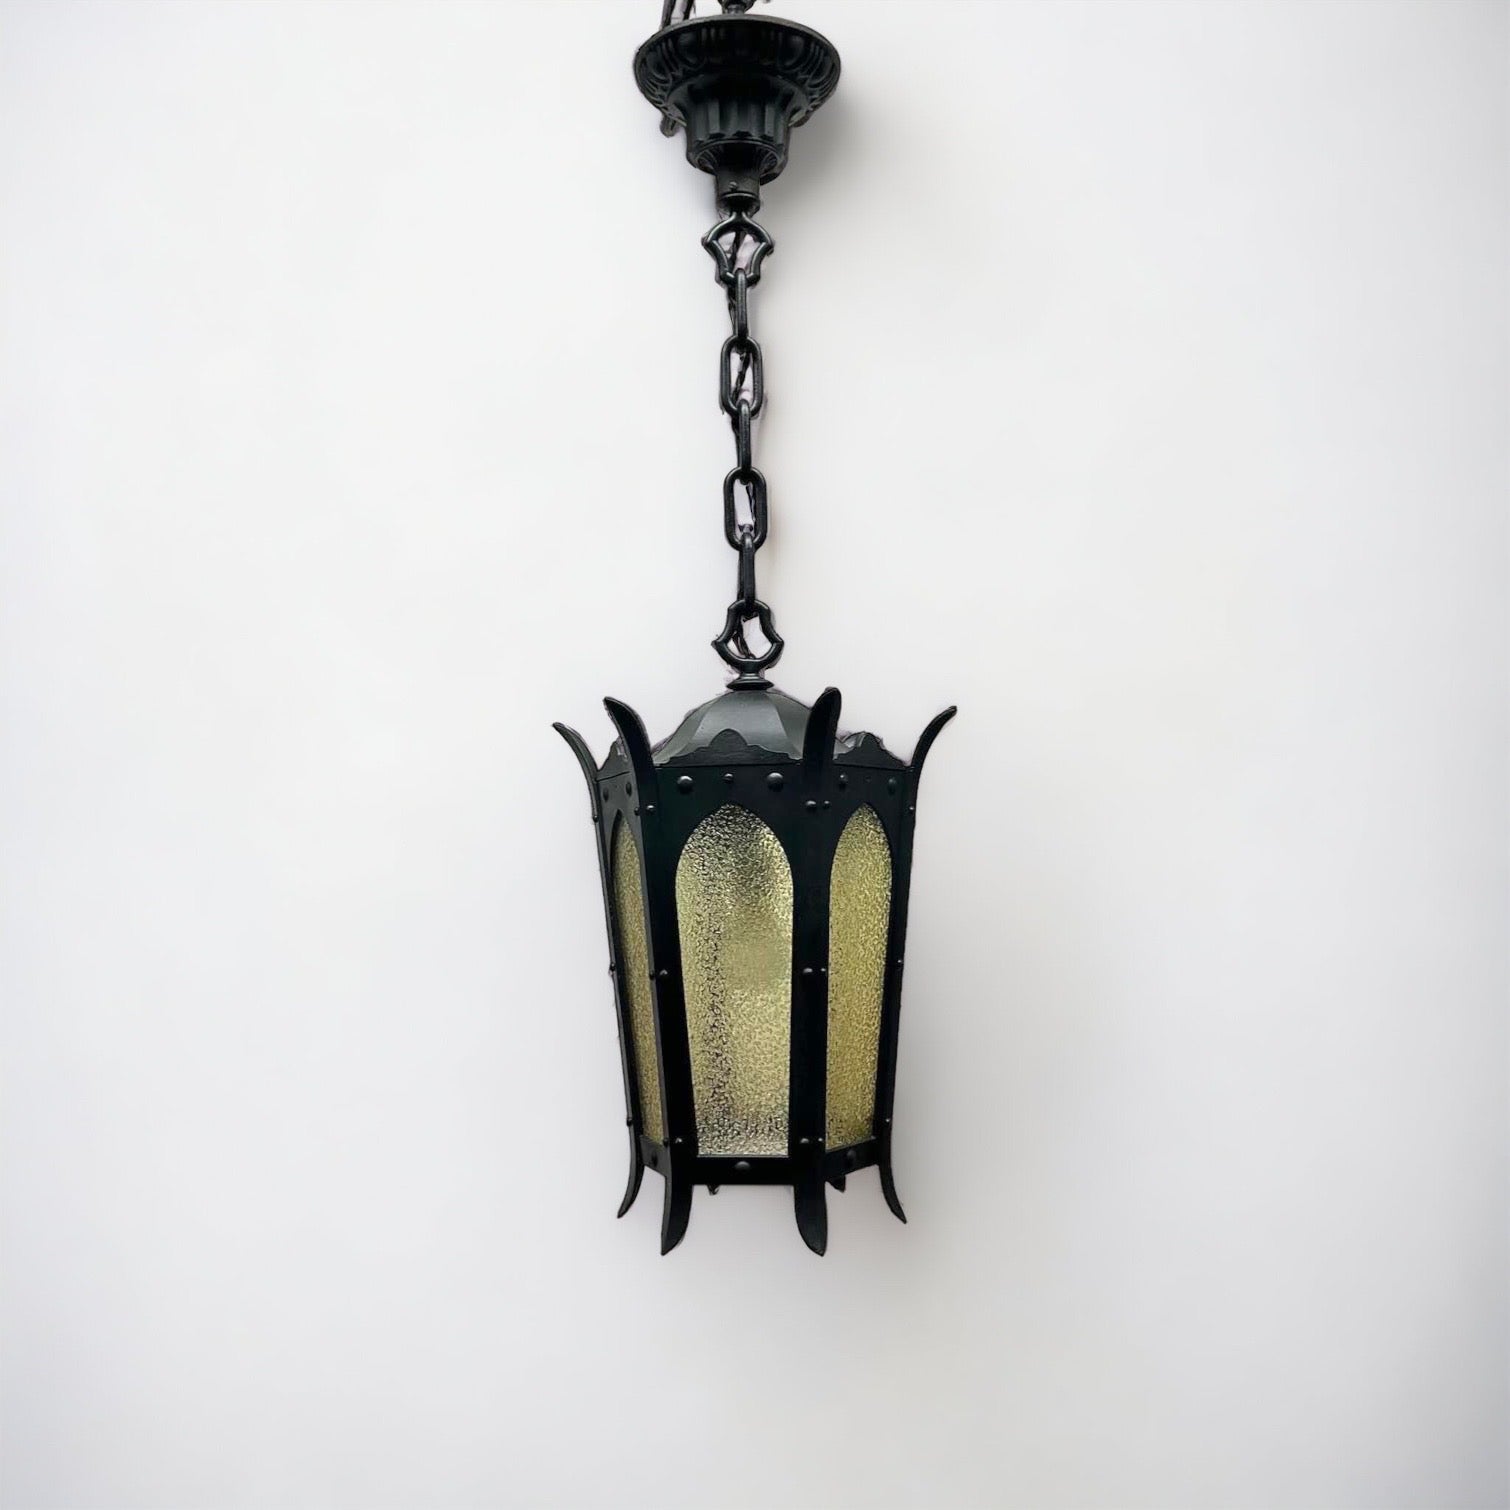 Antique Iron Gothic/Tudor Style Pendant Light - Restored/Rewired